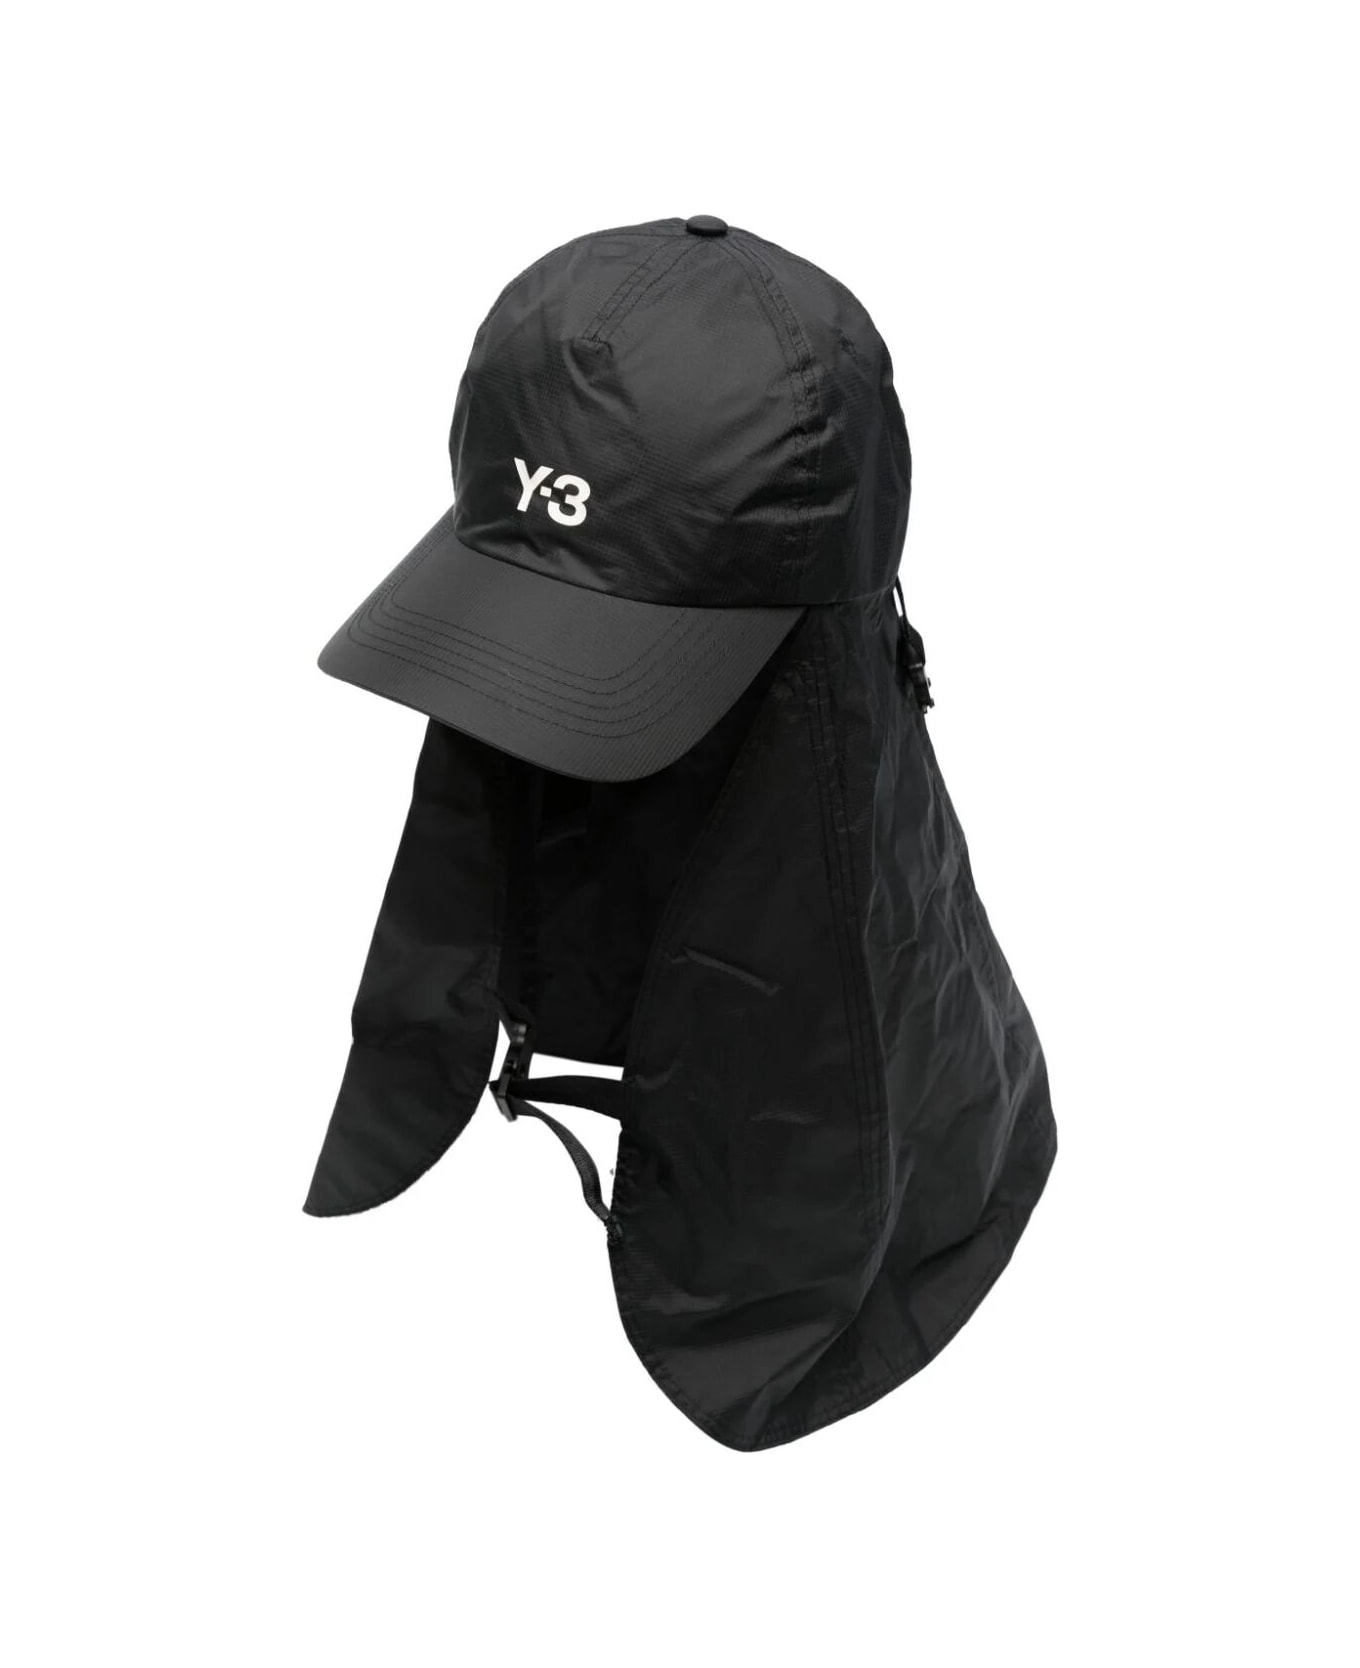 Y-3 Ut Hat - Black 帽子